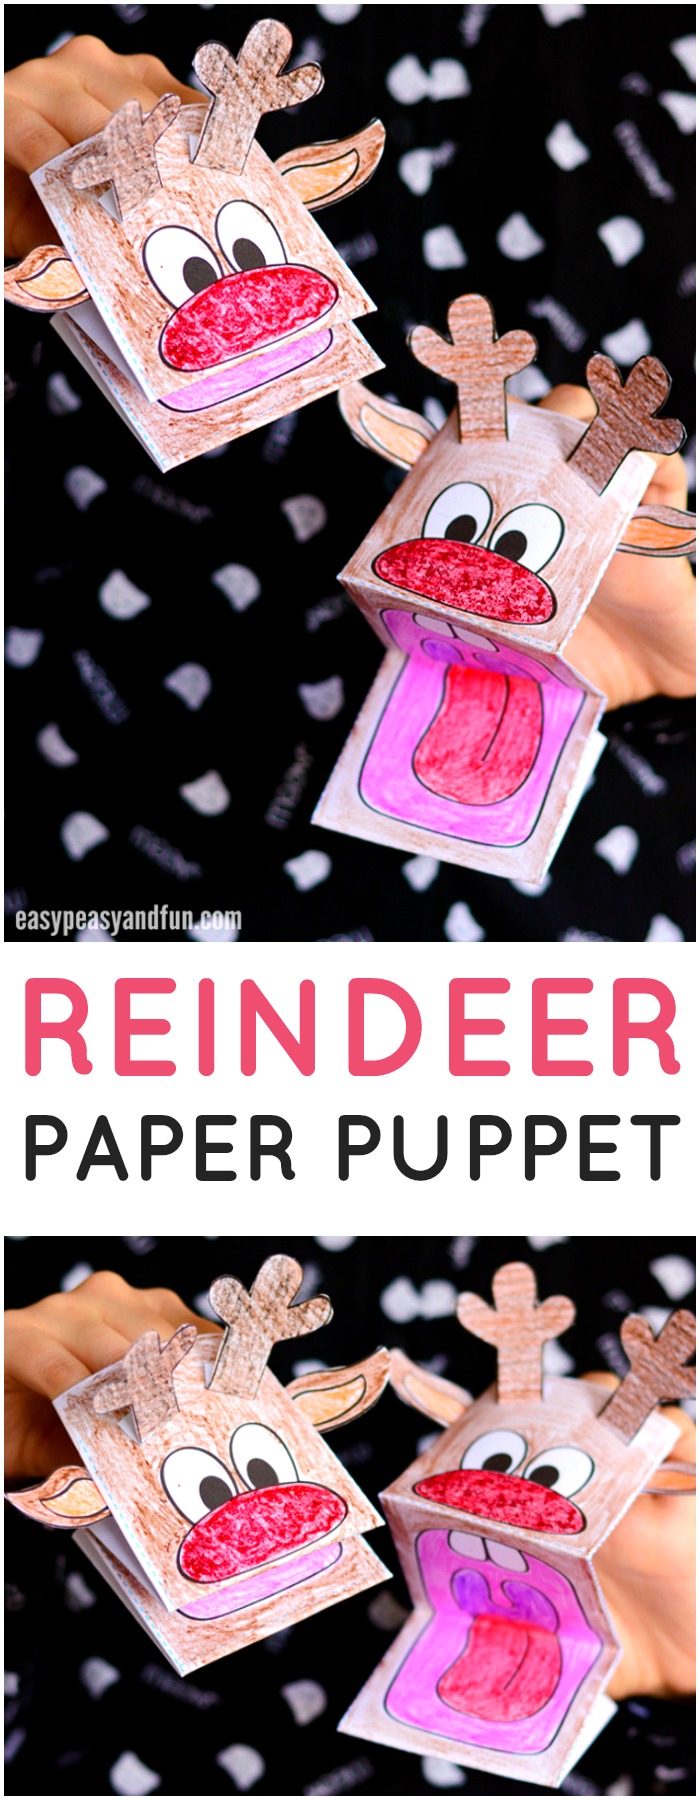 Printable reindeer paper puppet.  Fun Christmas craft idea for kids.